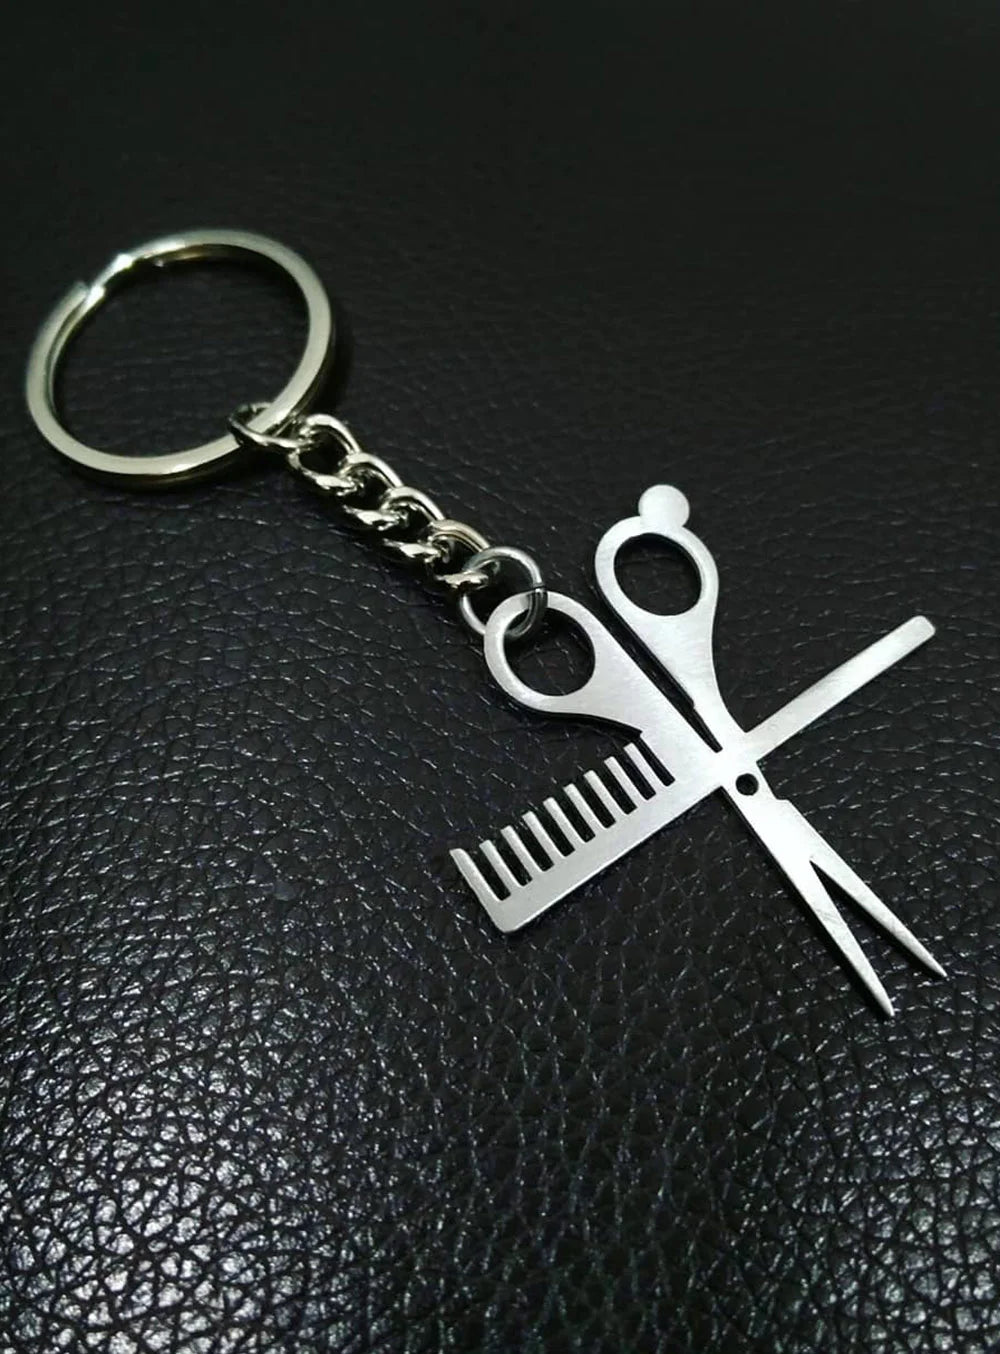 Comb and Scissors Keychain